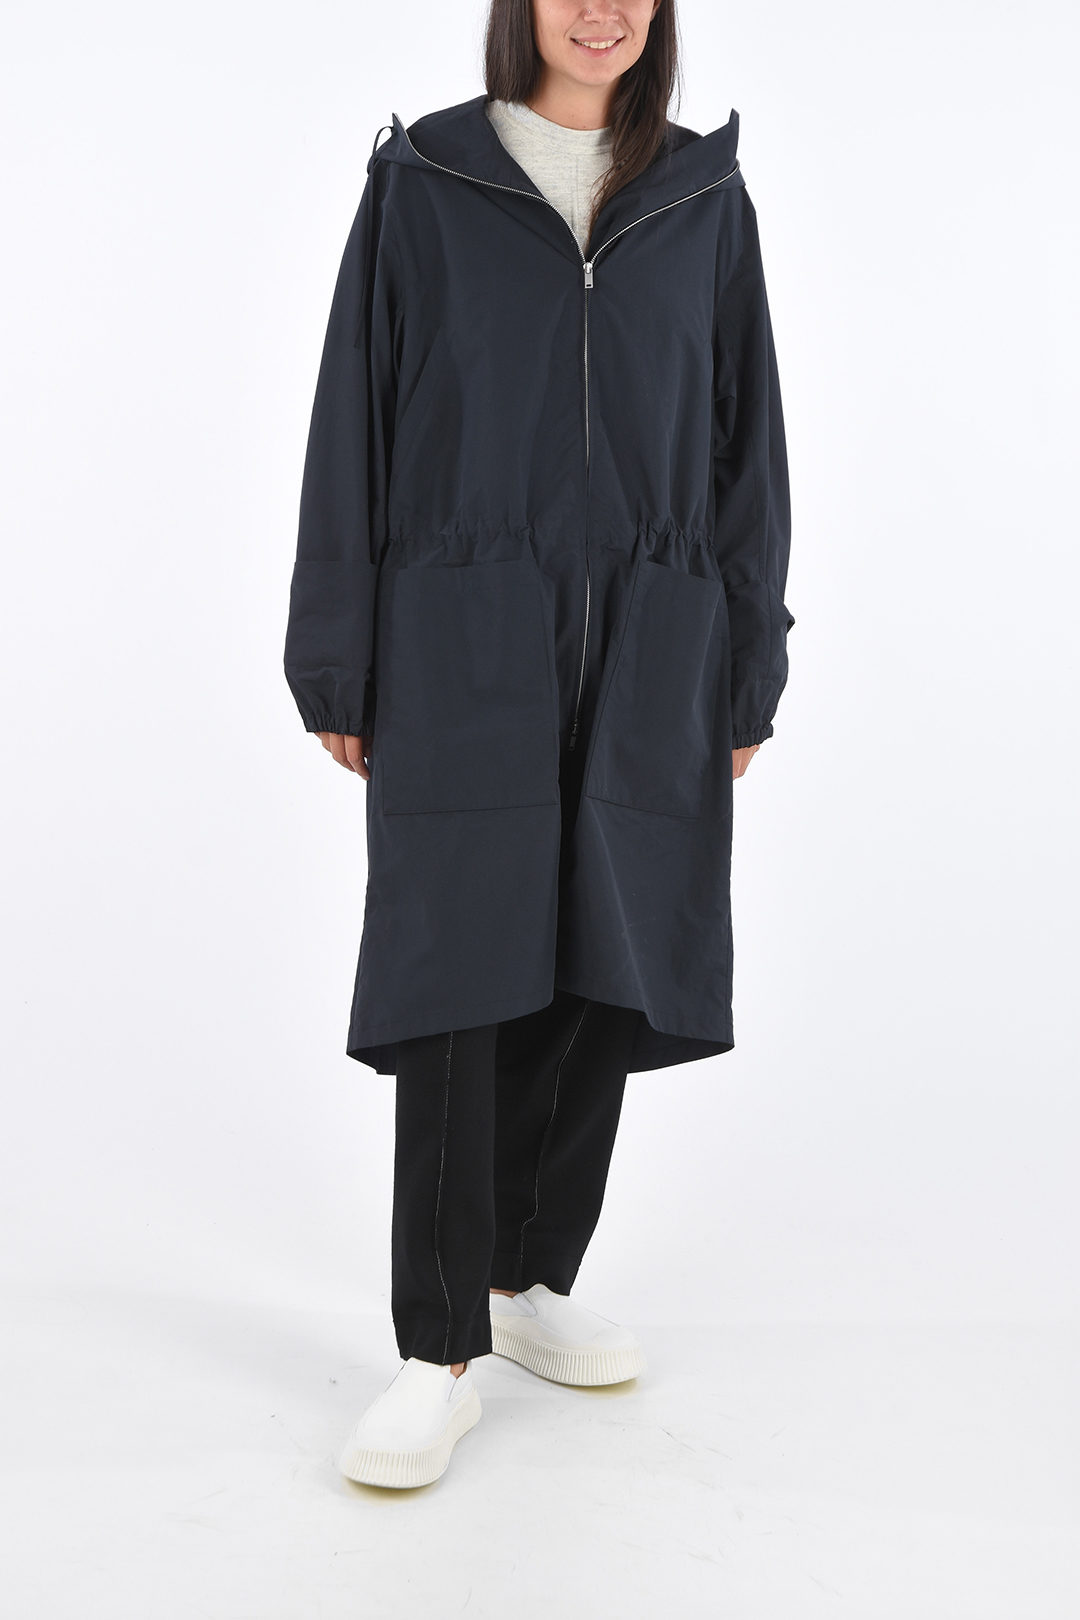 Jil Sander Oversized Overcoat with Hood women - Glamood Outlet